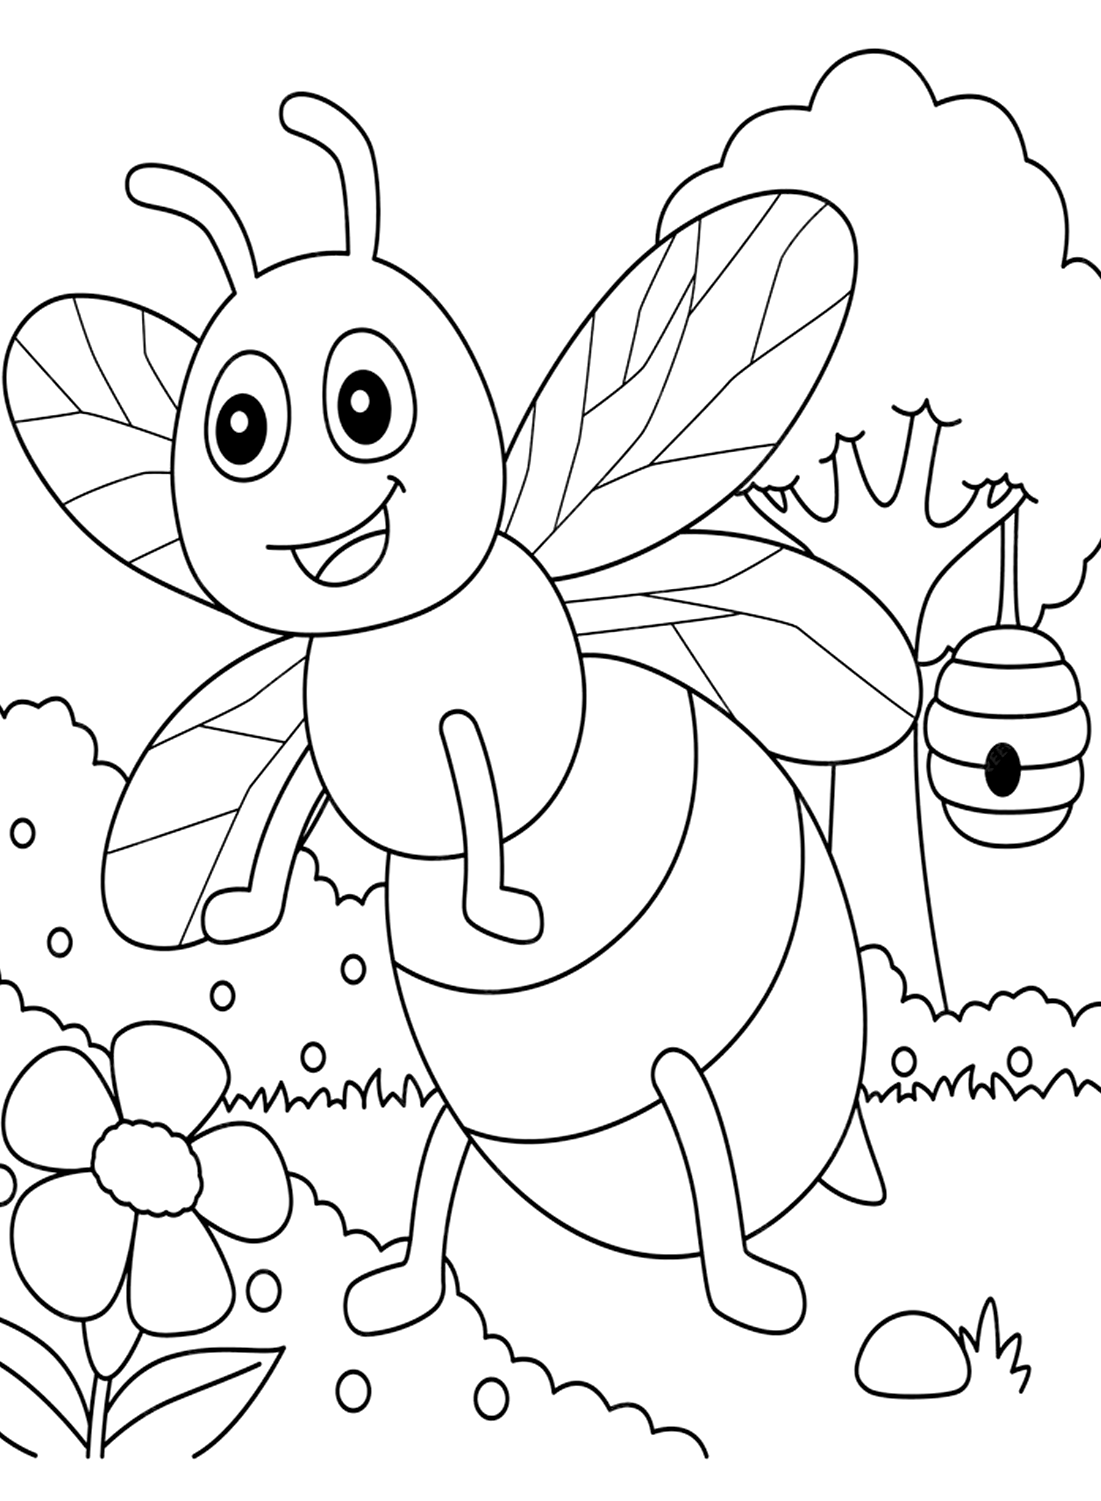 Immagini da colorare di api da Bee